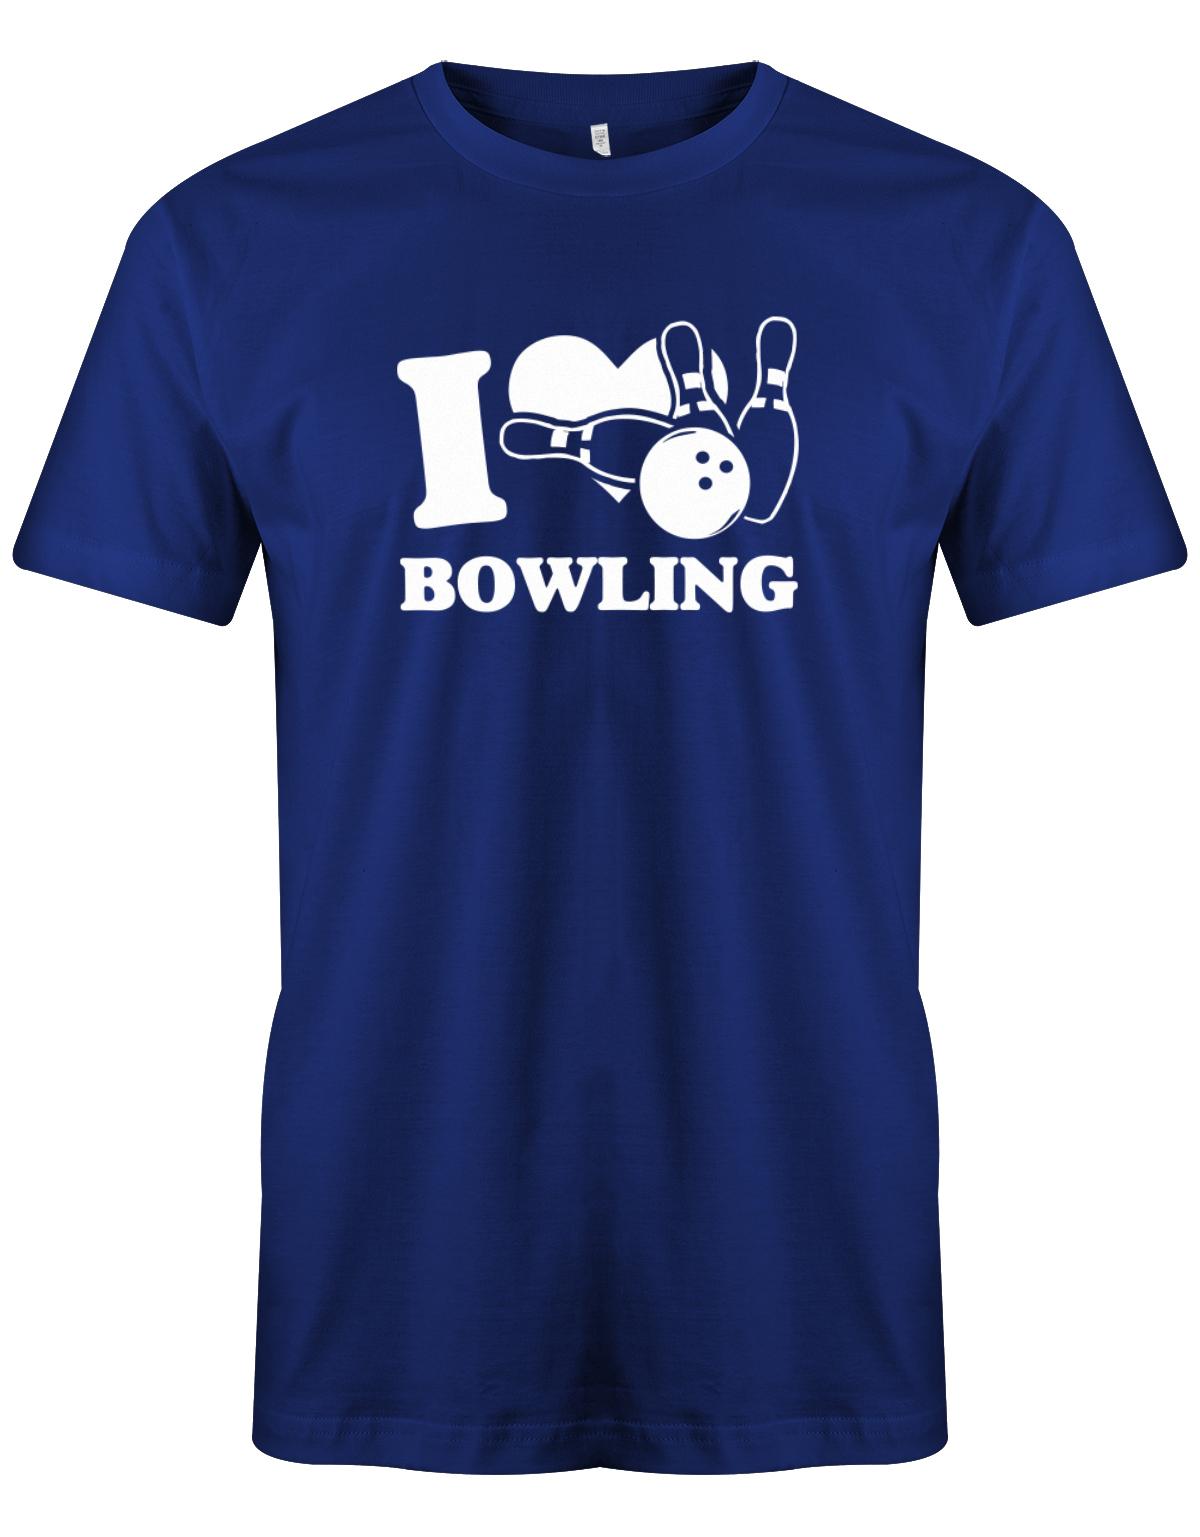 I-LOve-Bowling-Herren-Shirt-Royalblau